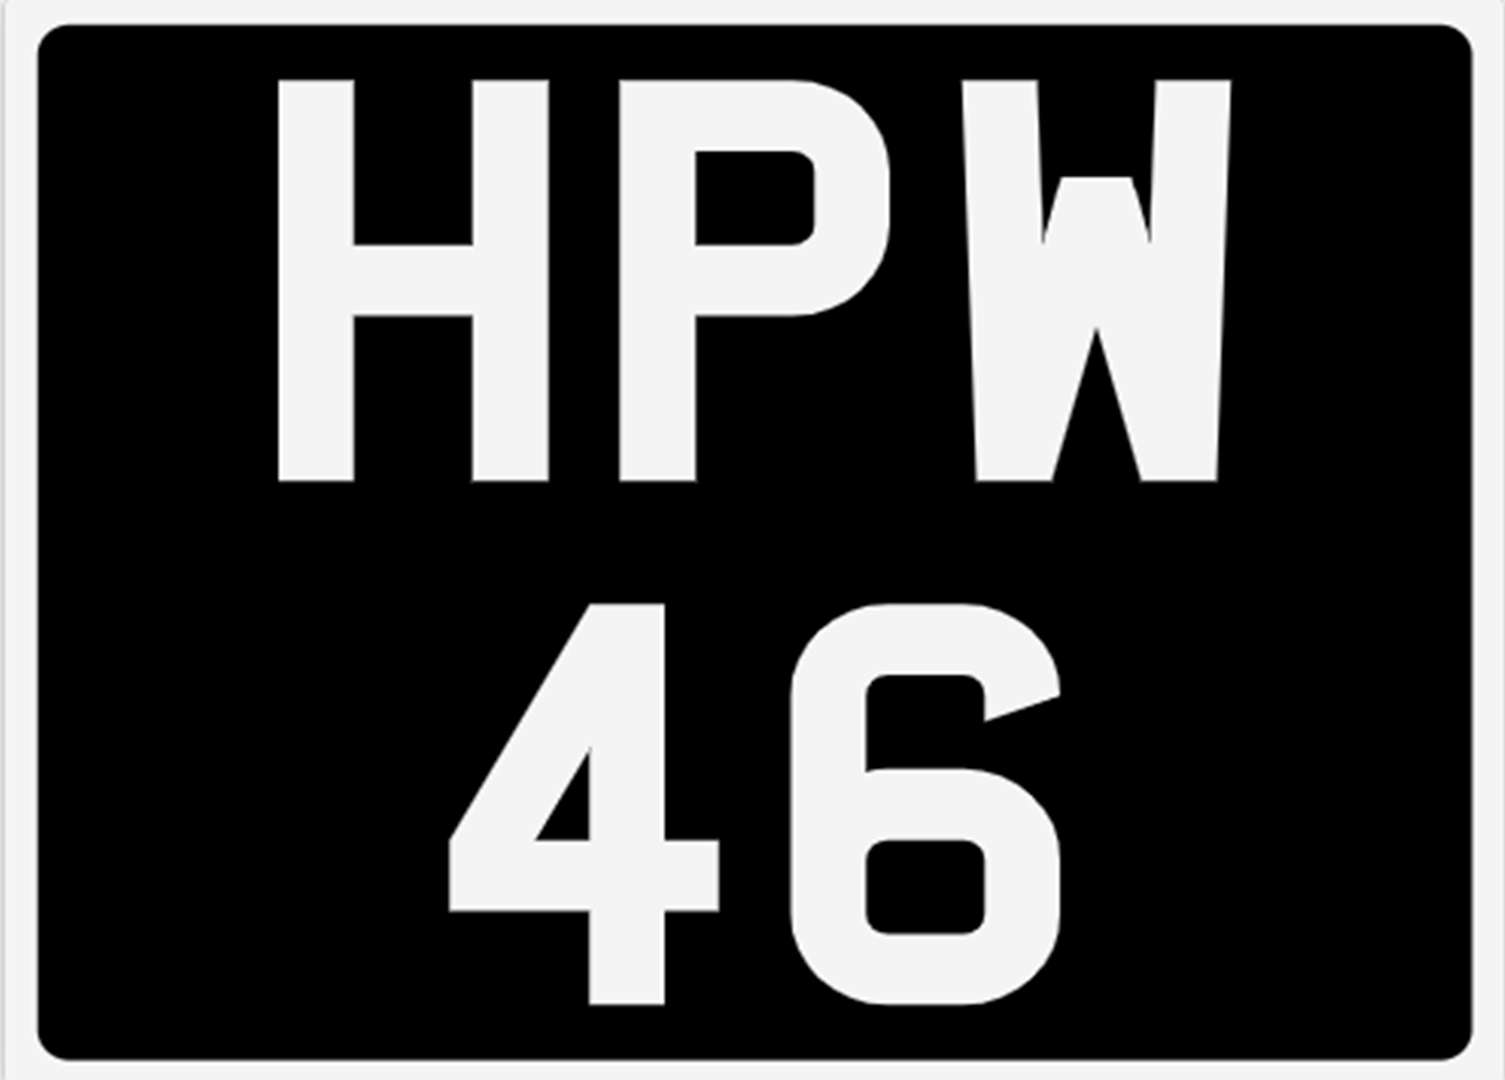 <p>&nbsp; HPW 46 Registration Number&nbsp;</p>